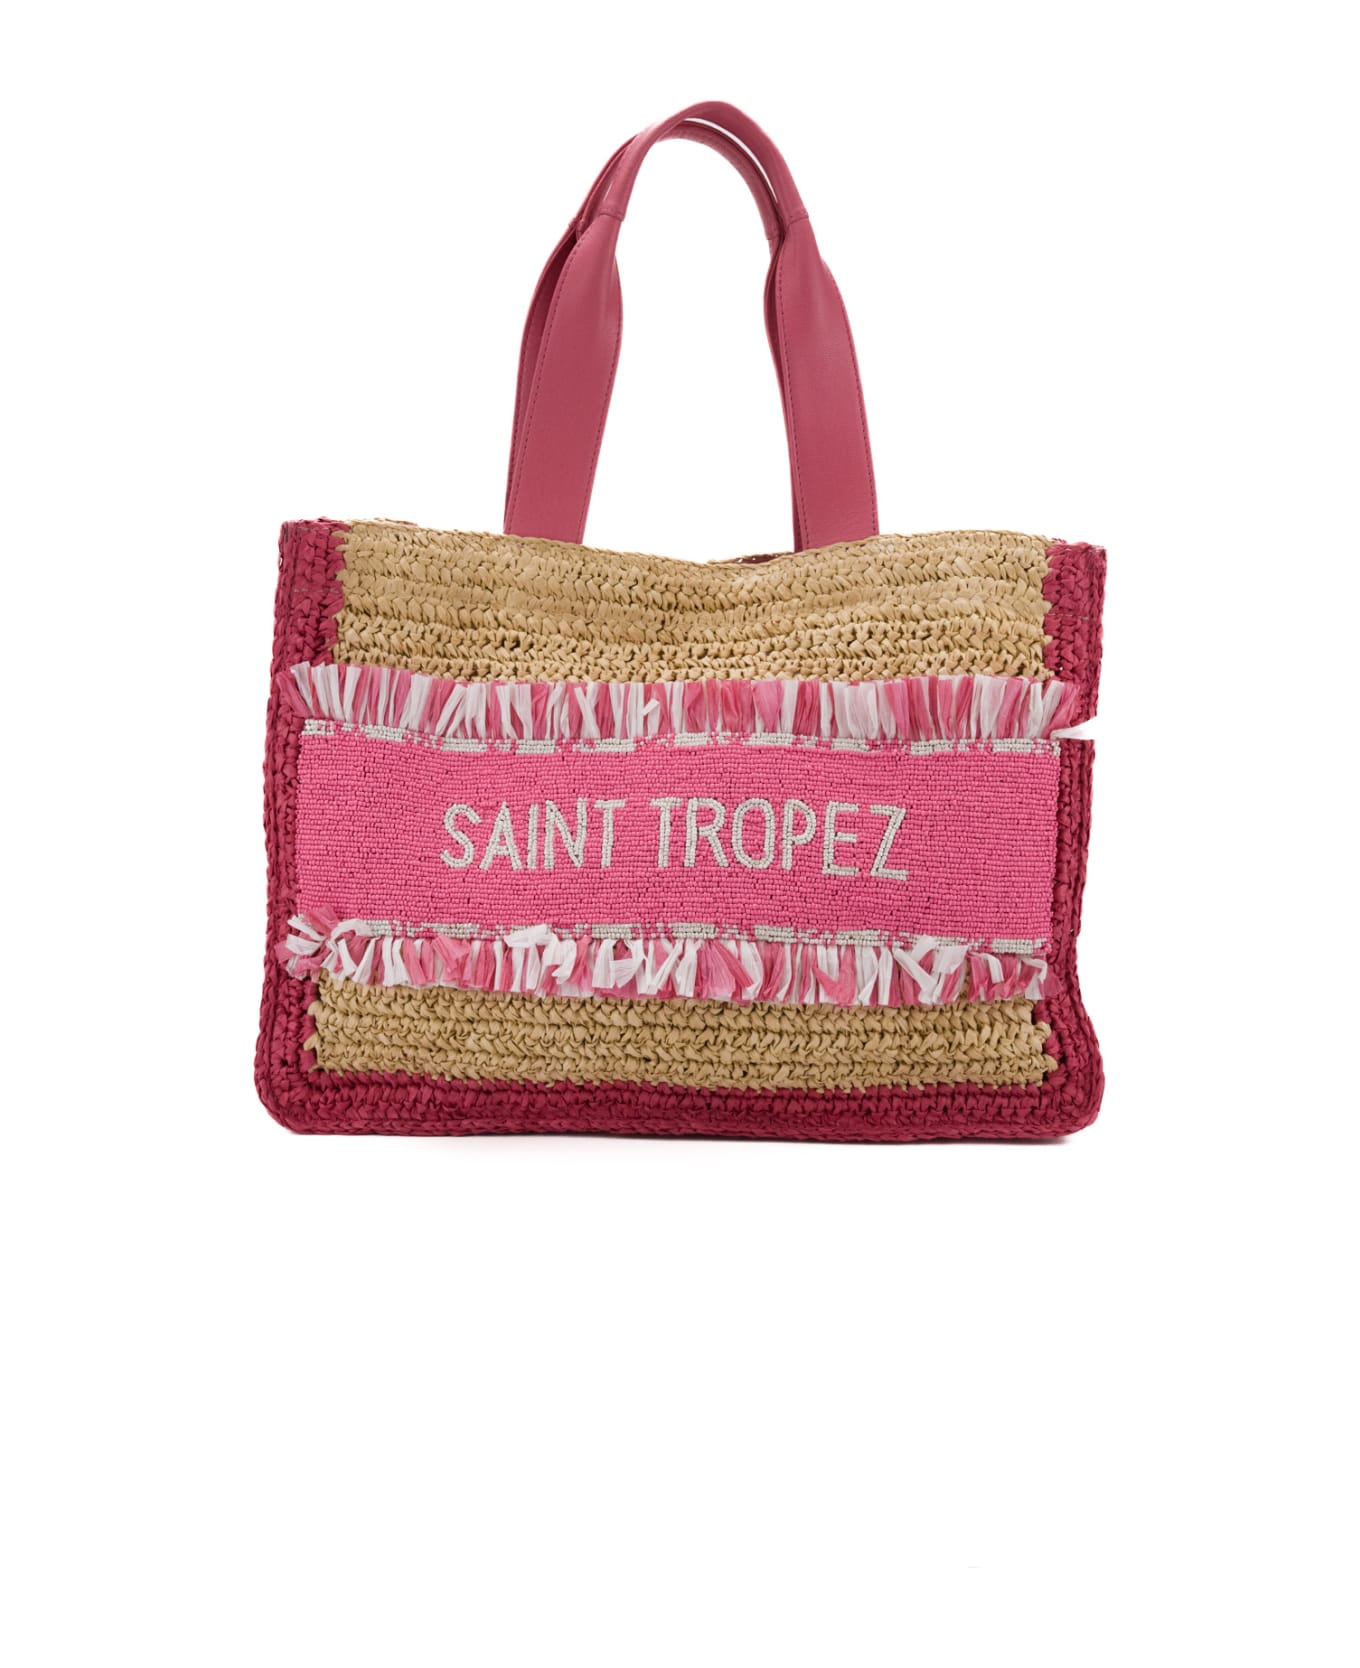 De Siena Pink Saint Tropez Bag - Natural pink